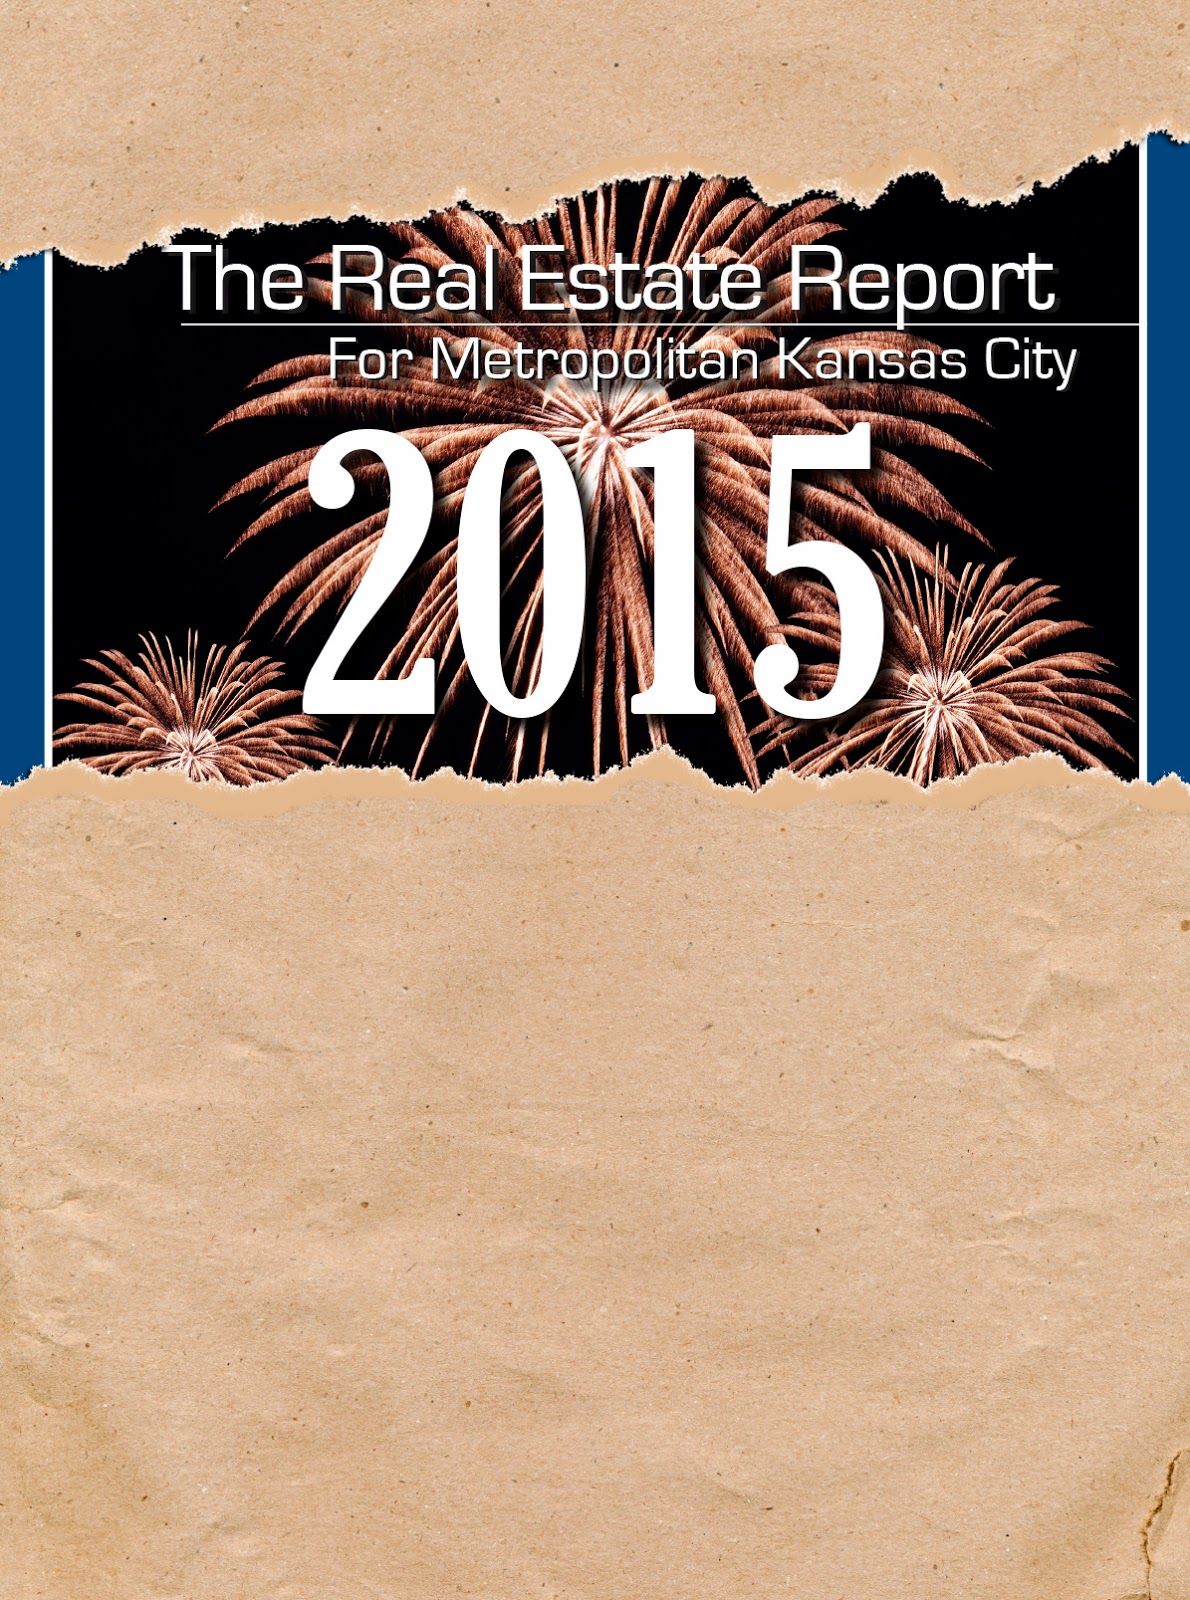 Market Report 2015 Sneak Peak - Day 6 Investment